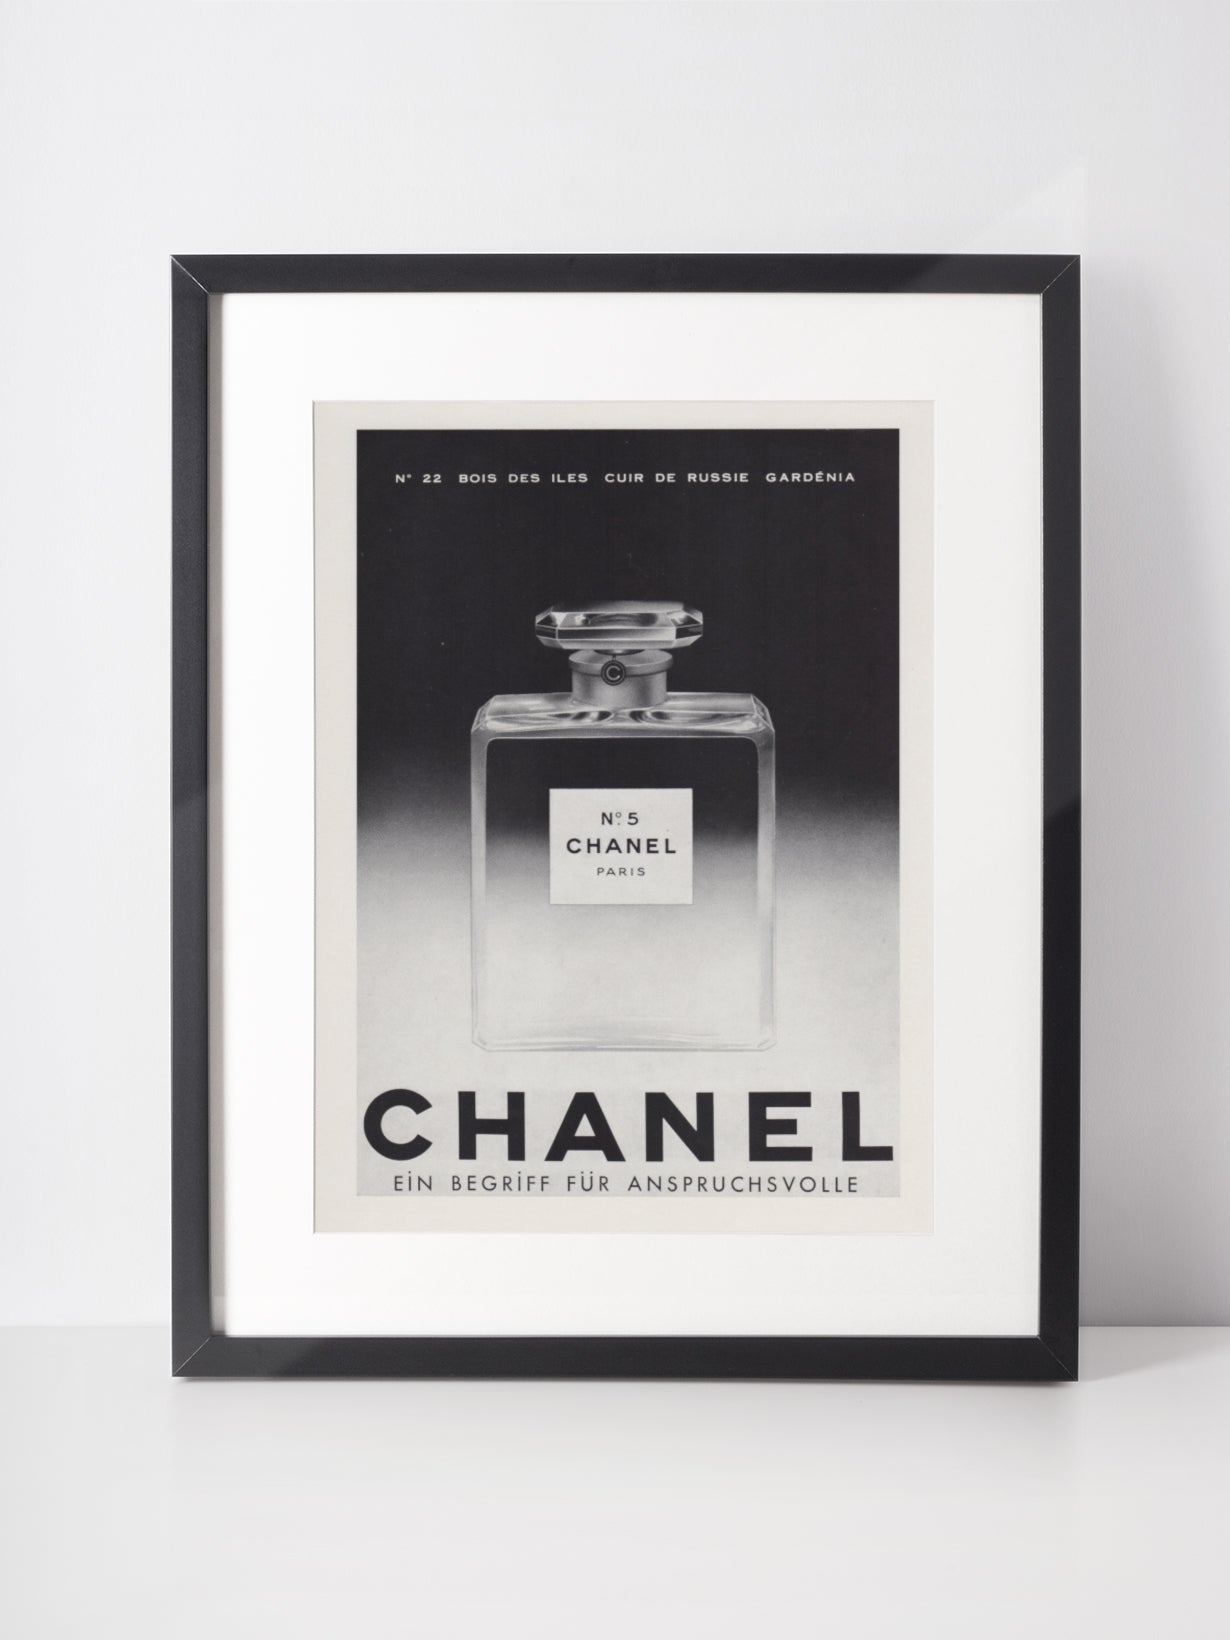 CHANEL 1954 Vintage Print Advertisement No. 5 Perfume Parfum